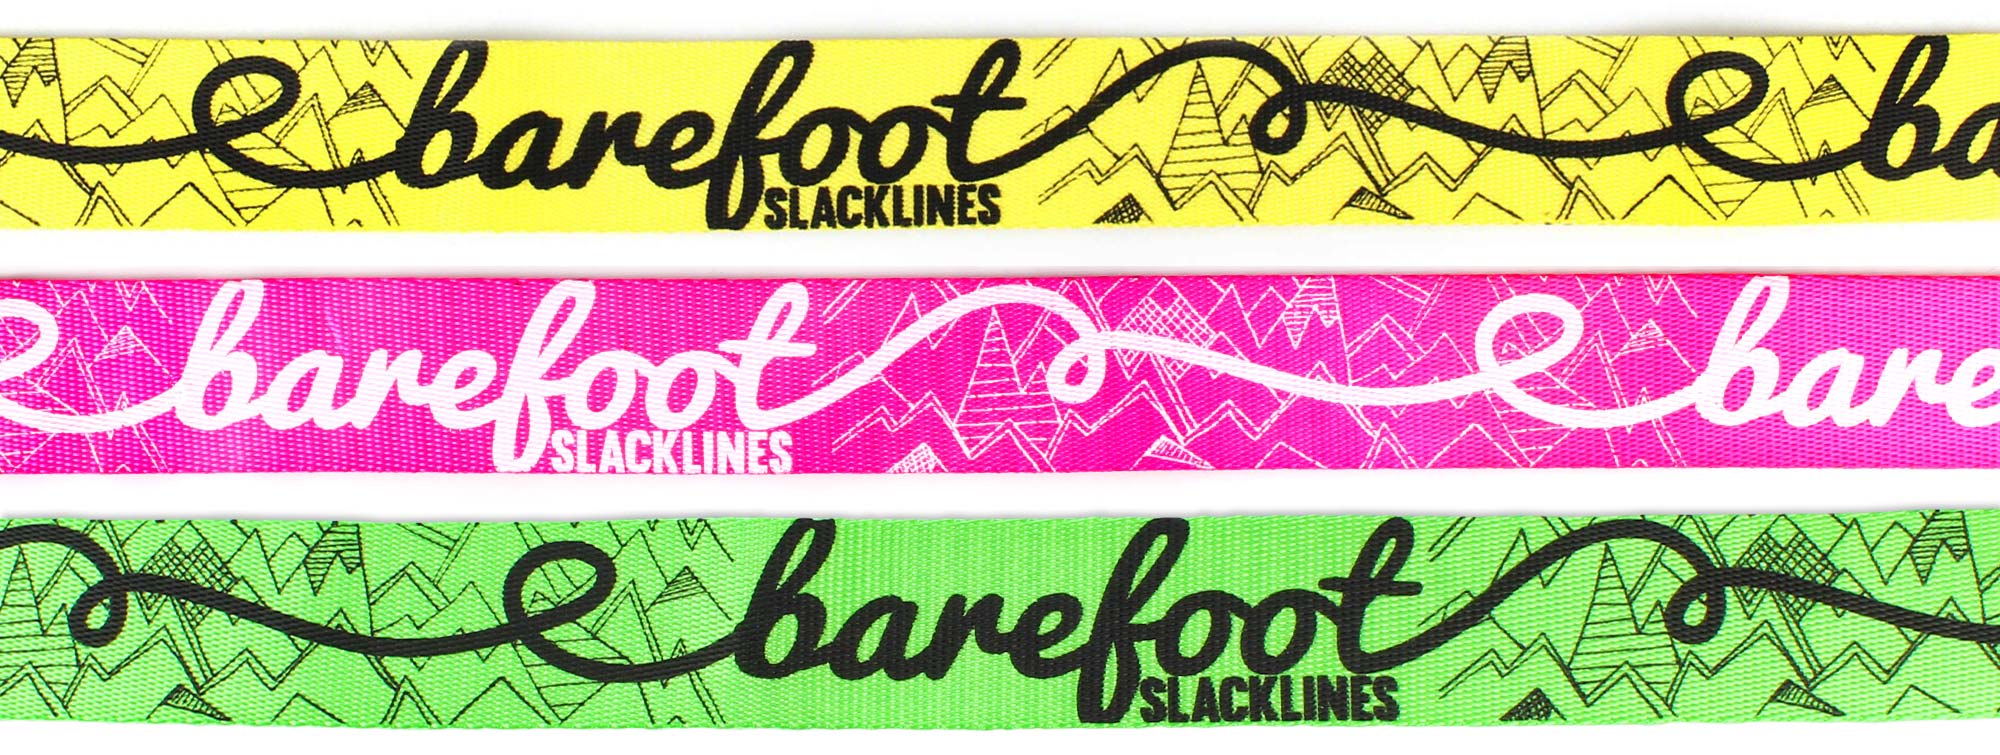 barefoot slackline pattern